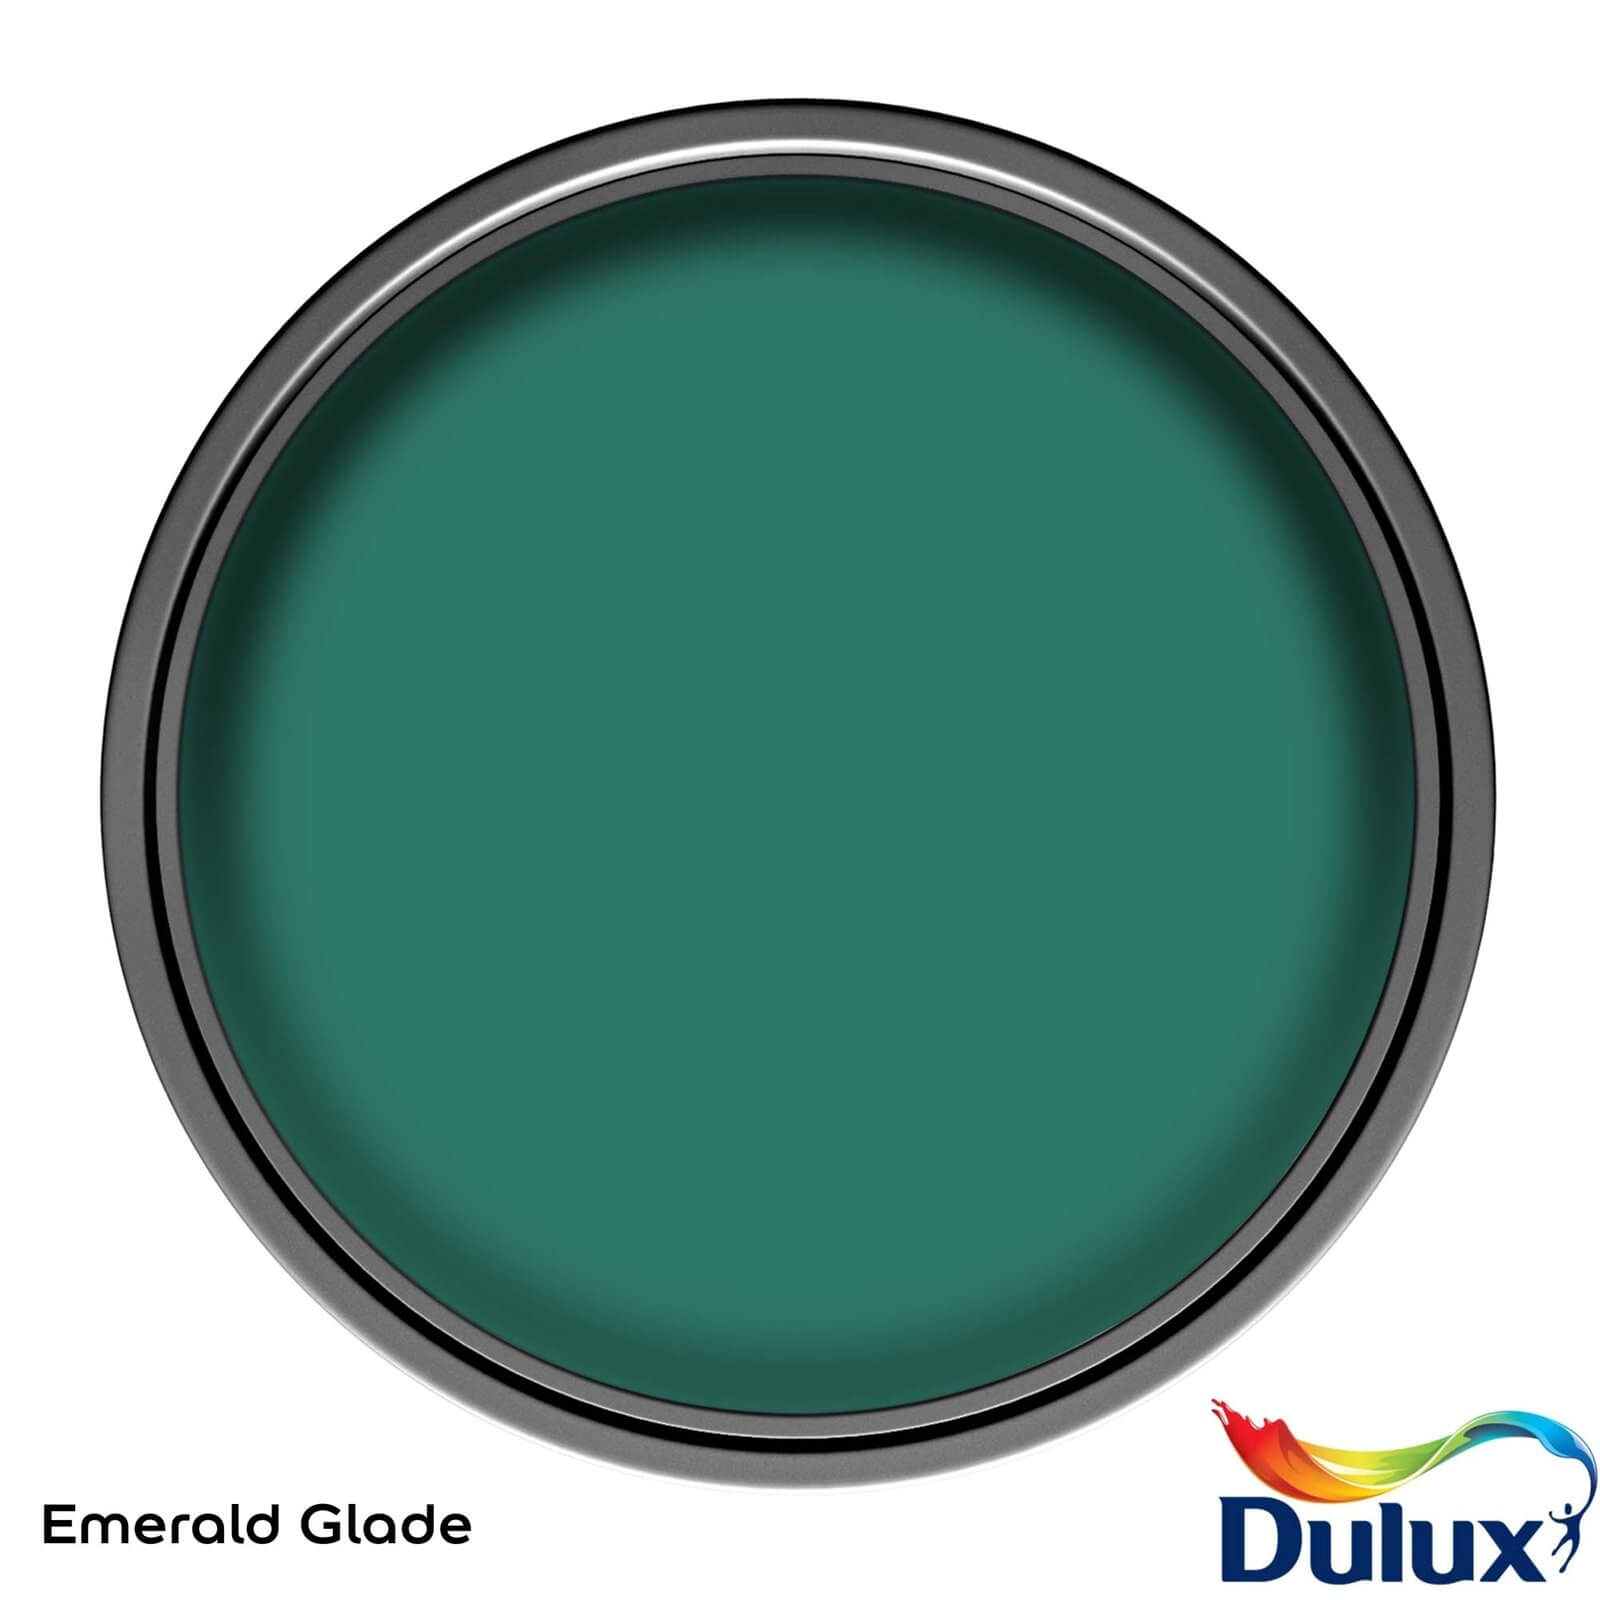 Dulux Easycare Kitchen Emerald Glade Matt Paint - 2.5L